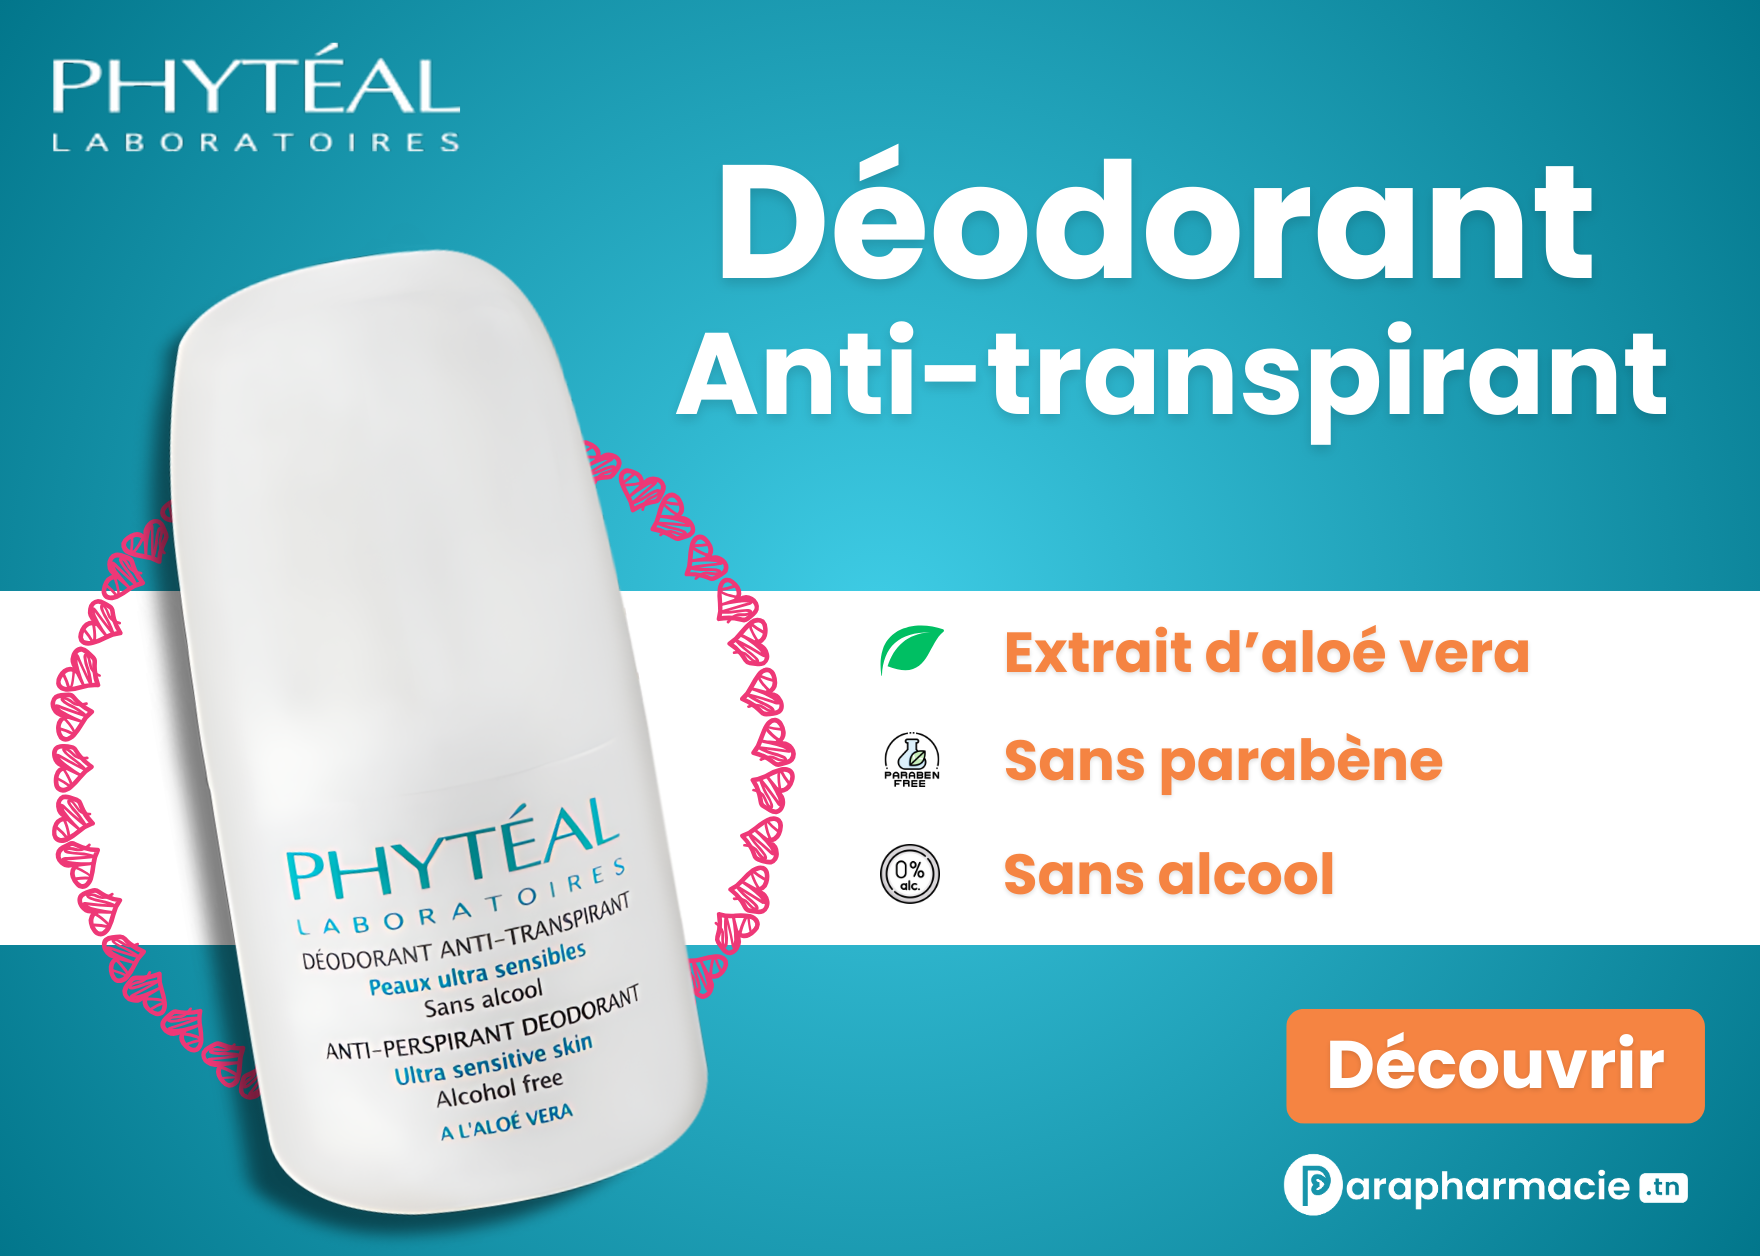 Déodorant phyteal tunisie